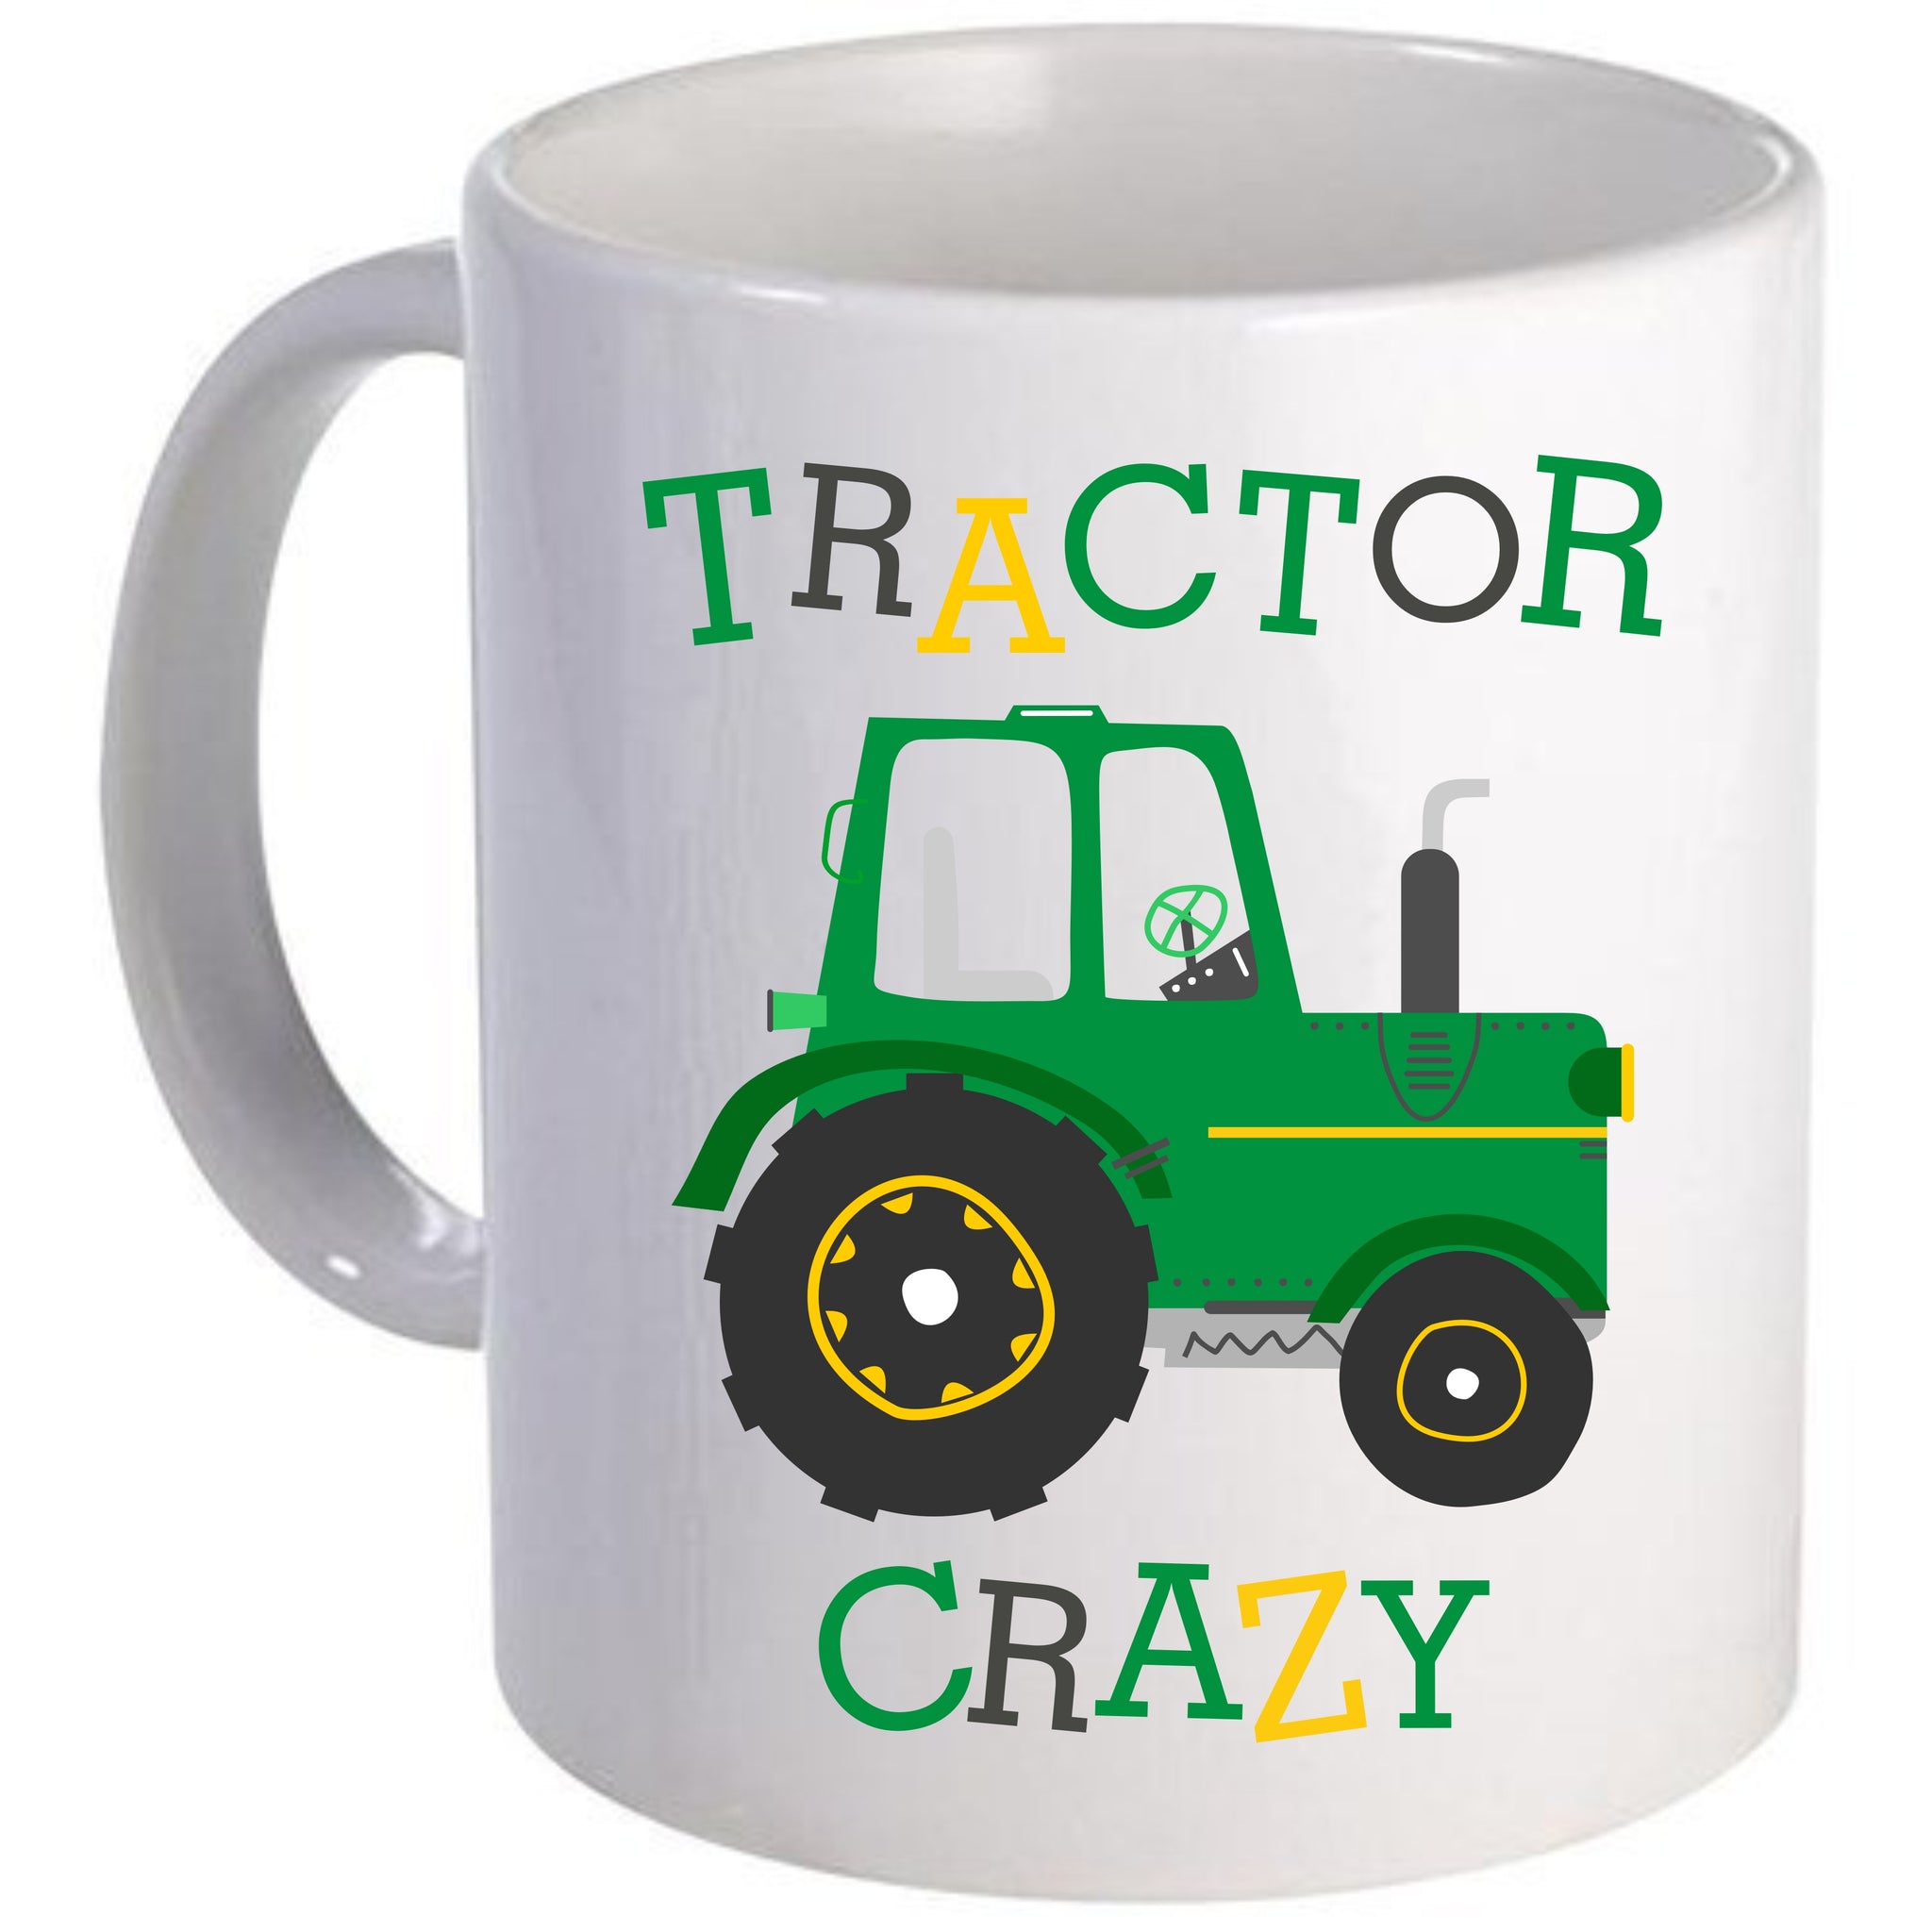 Tractor Crazy Mug